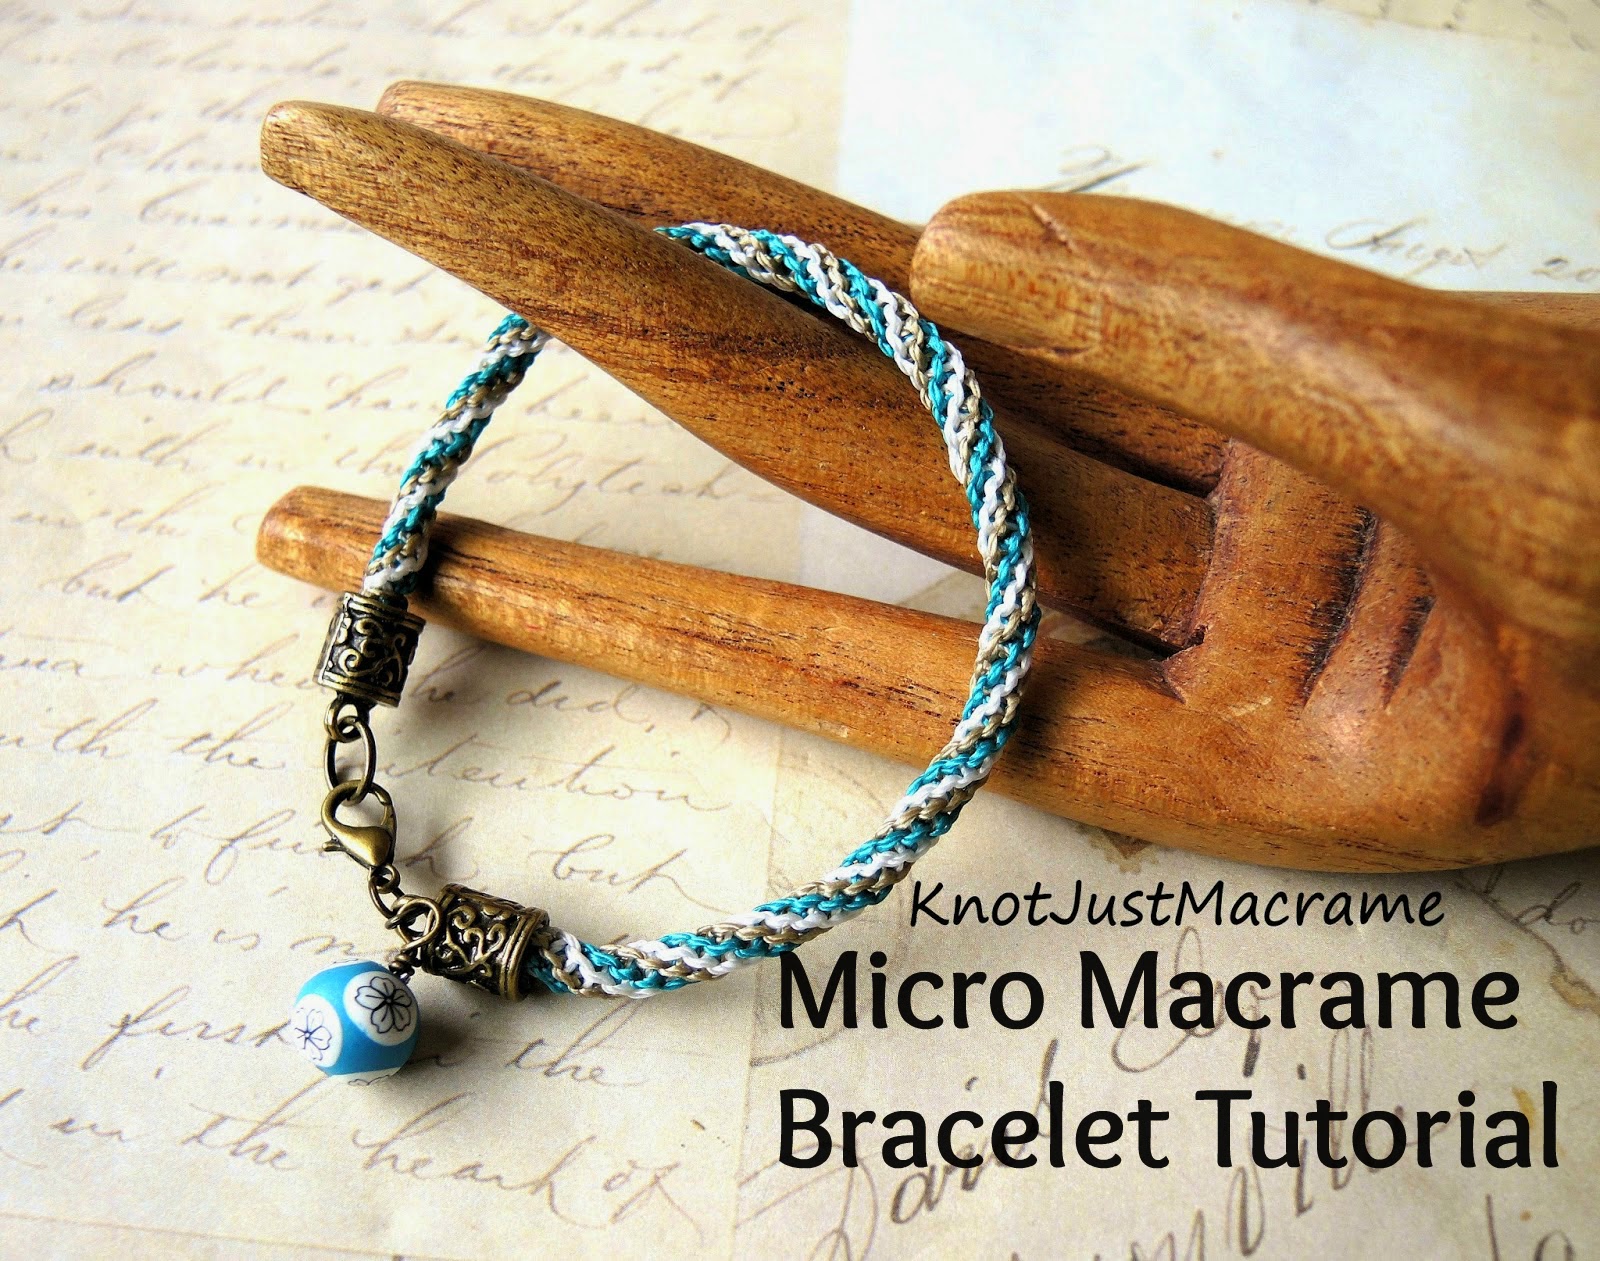 Micro macrame bracelet DIY tutorial from Sherri Stokey of Knot Just Macrame.